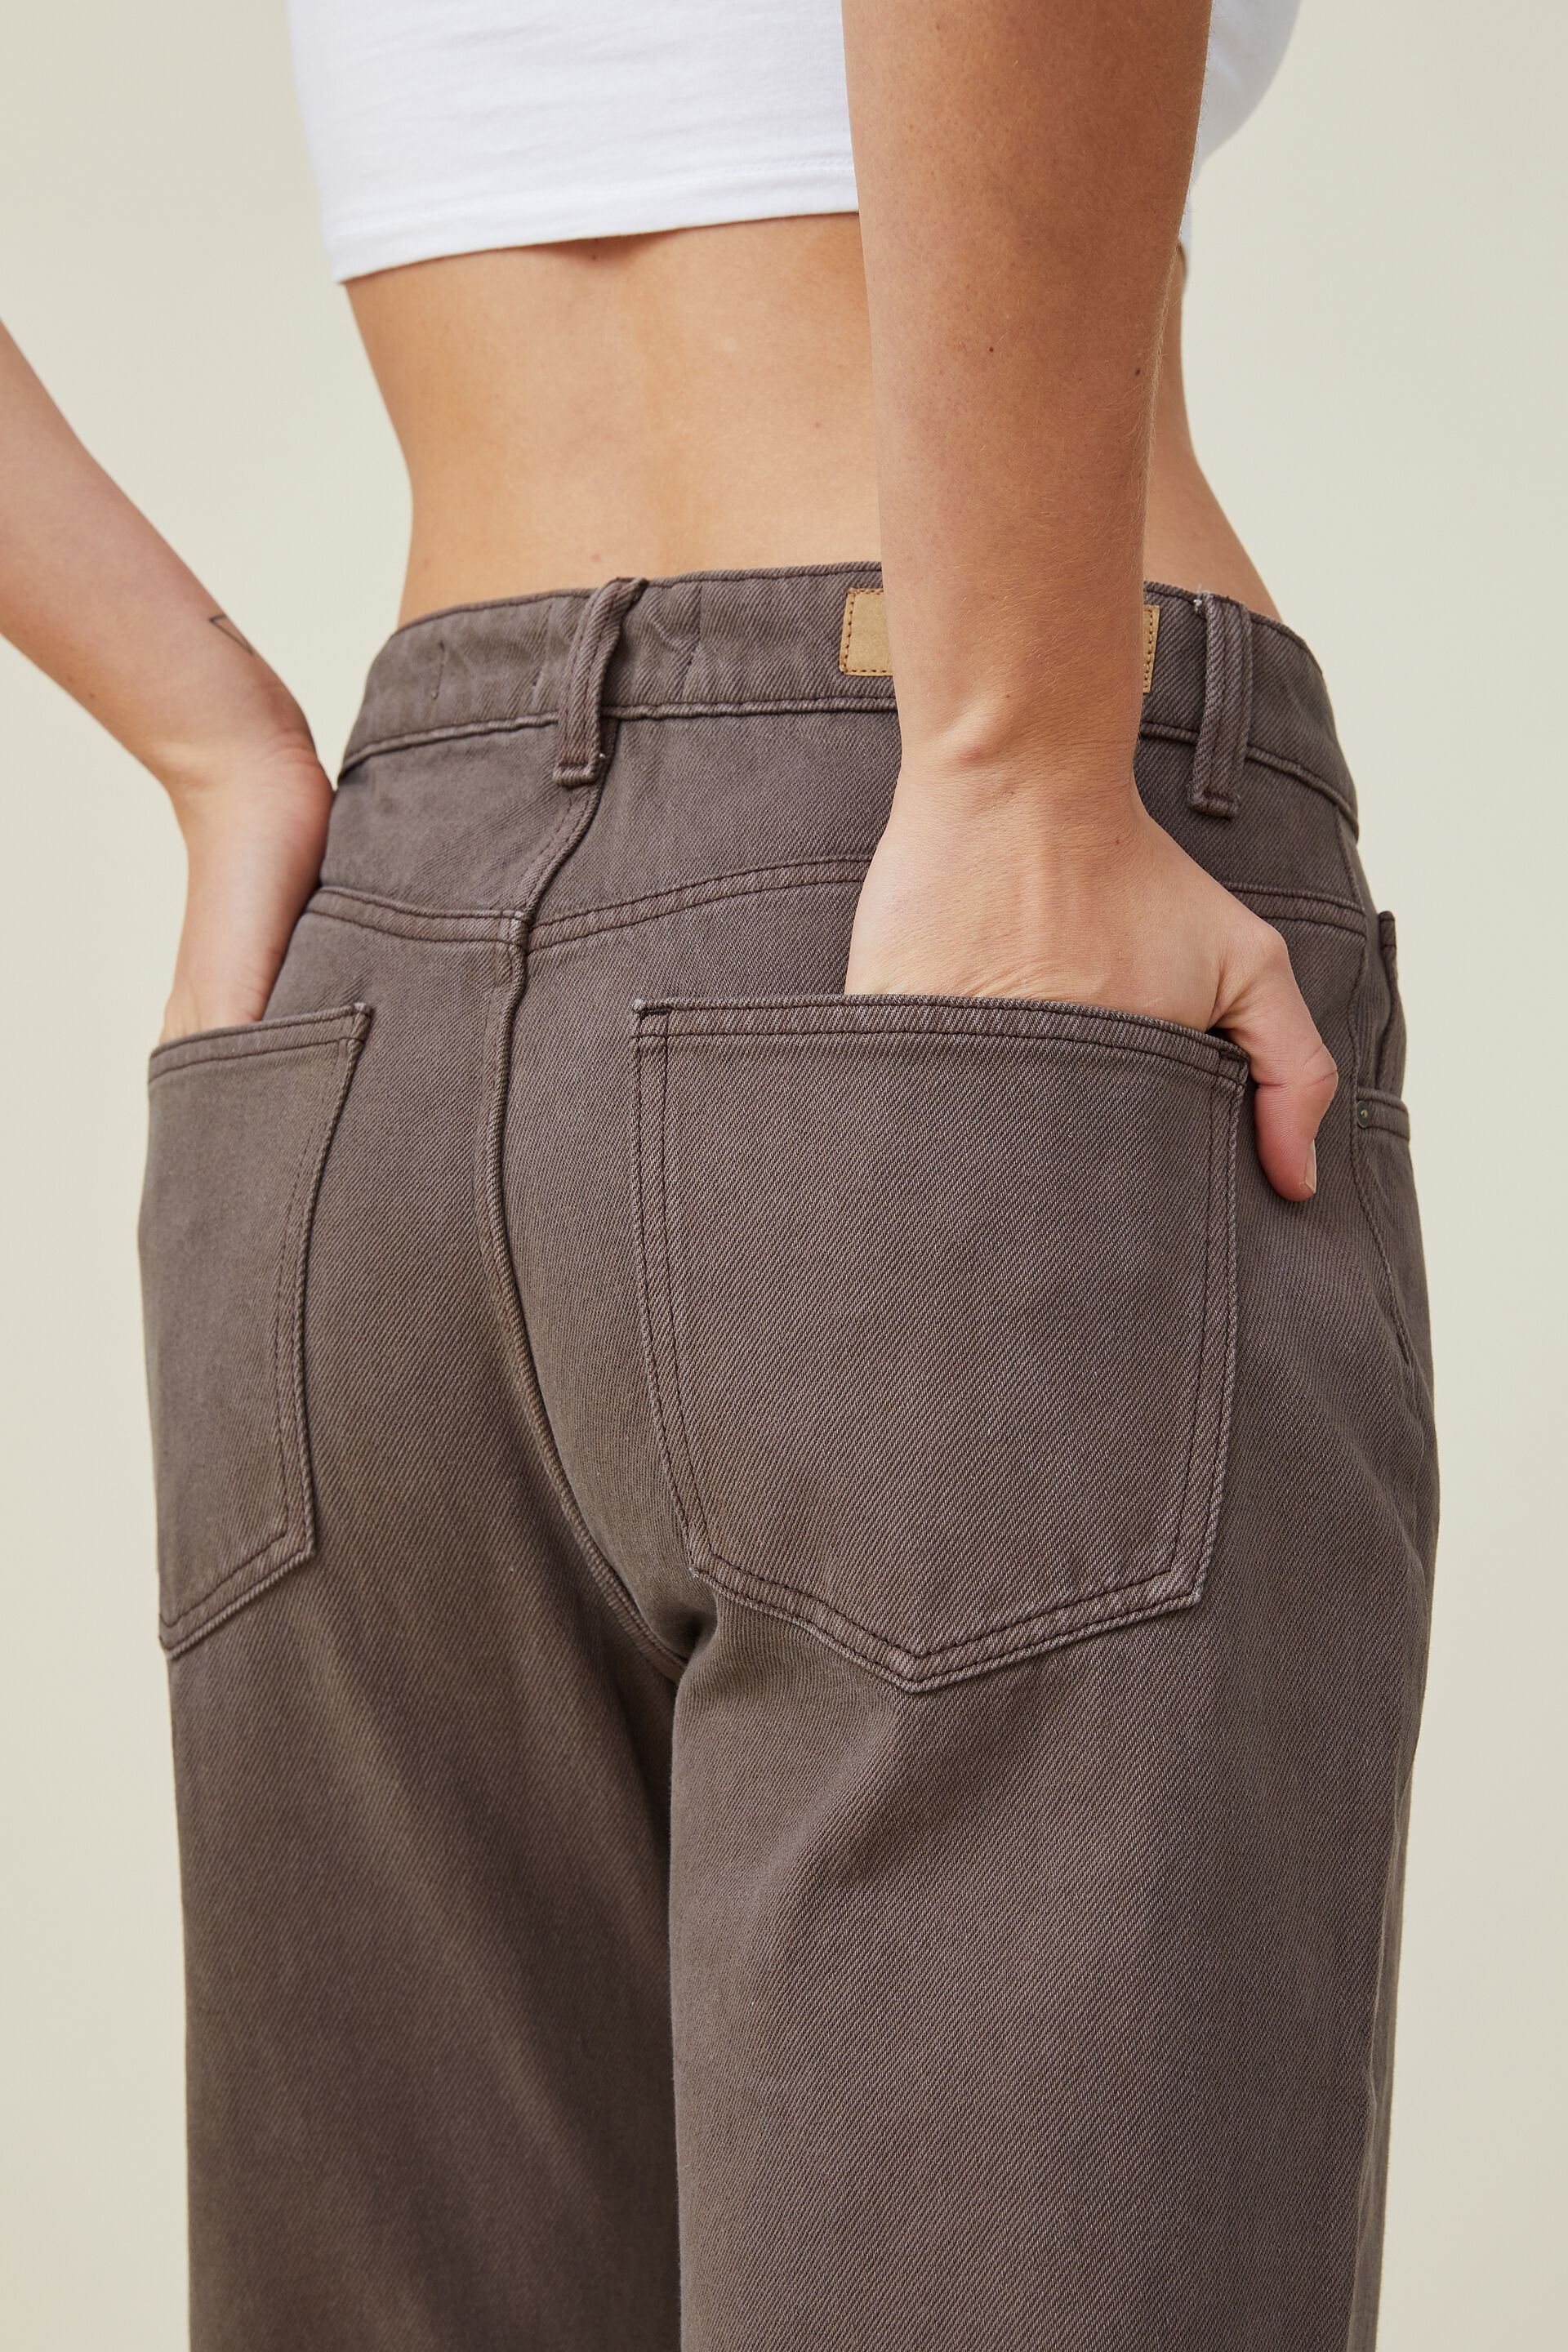 discount 98% Gray 36                  EU WOMEN FASHION Trousers Print Primark Chino trouser 